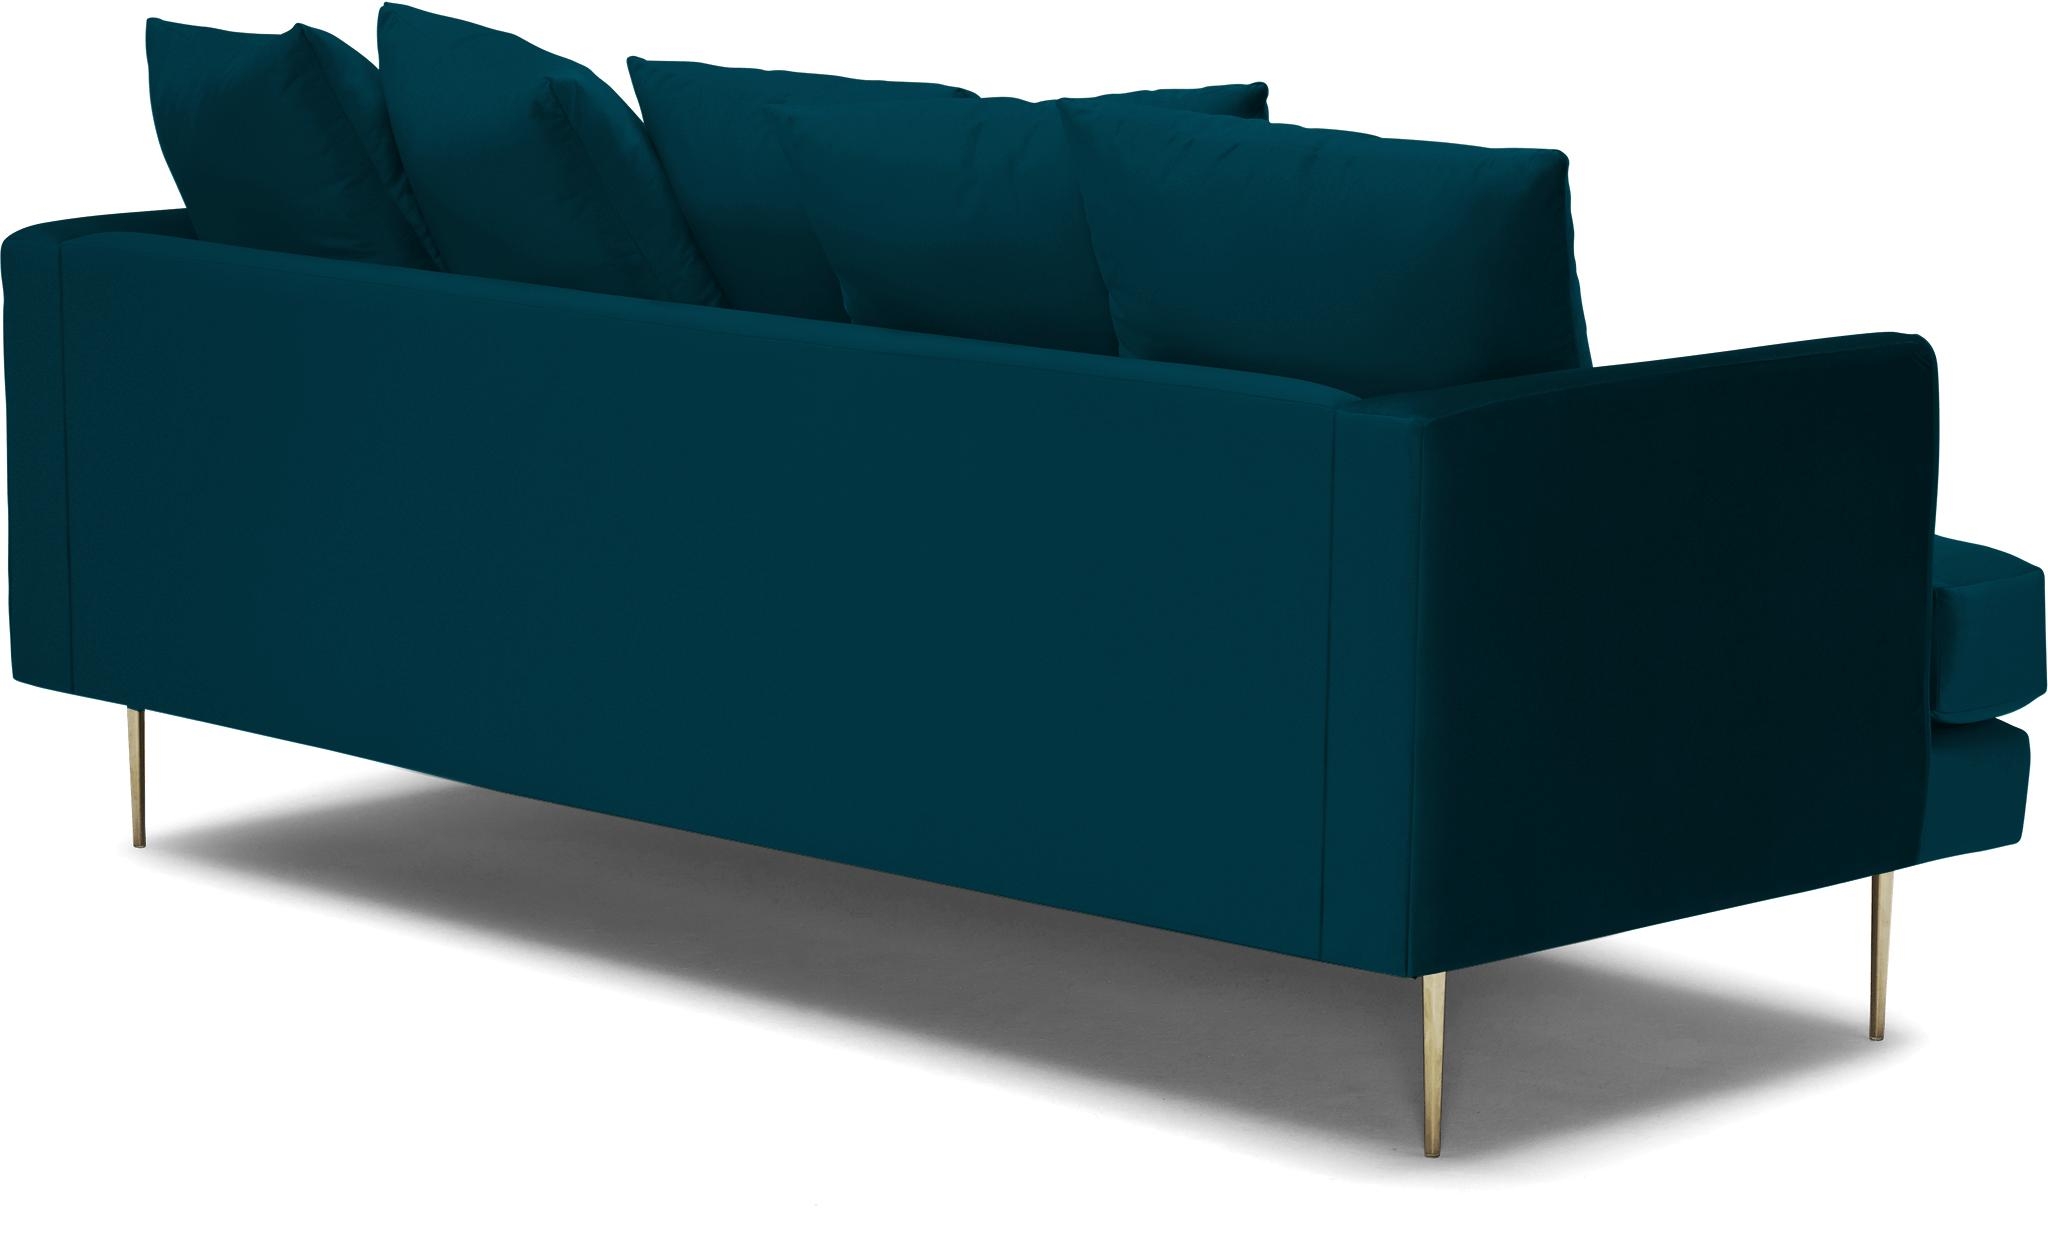 Blue Aime Mid Century Modern Sofa - Key Largo Zenith Teal - Image 3